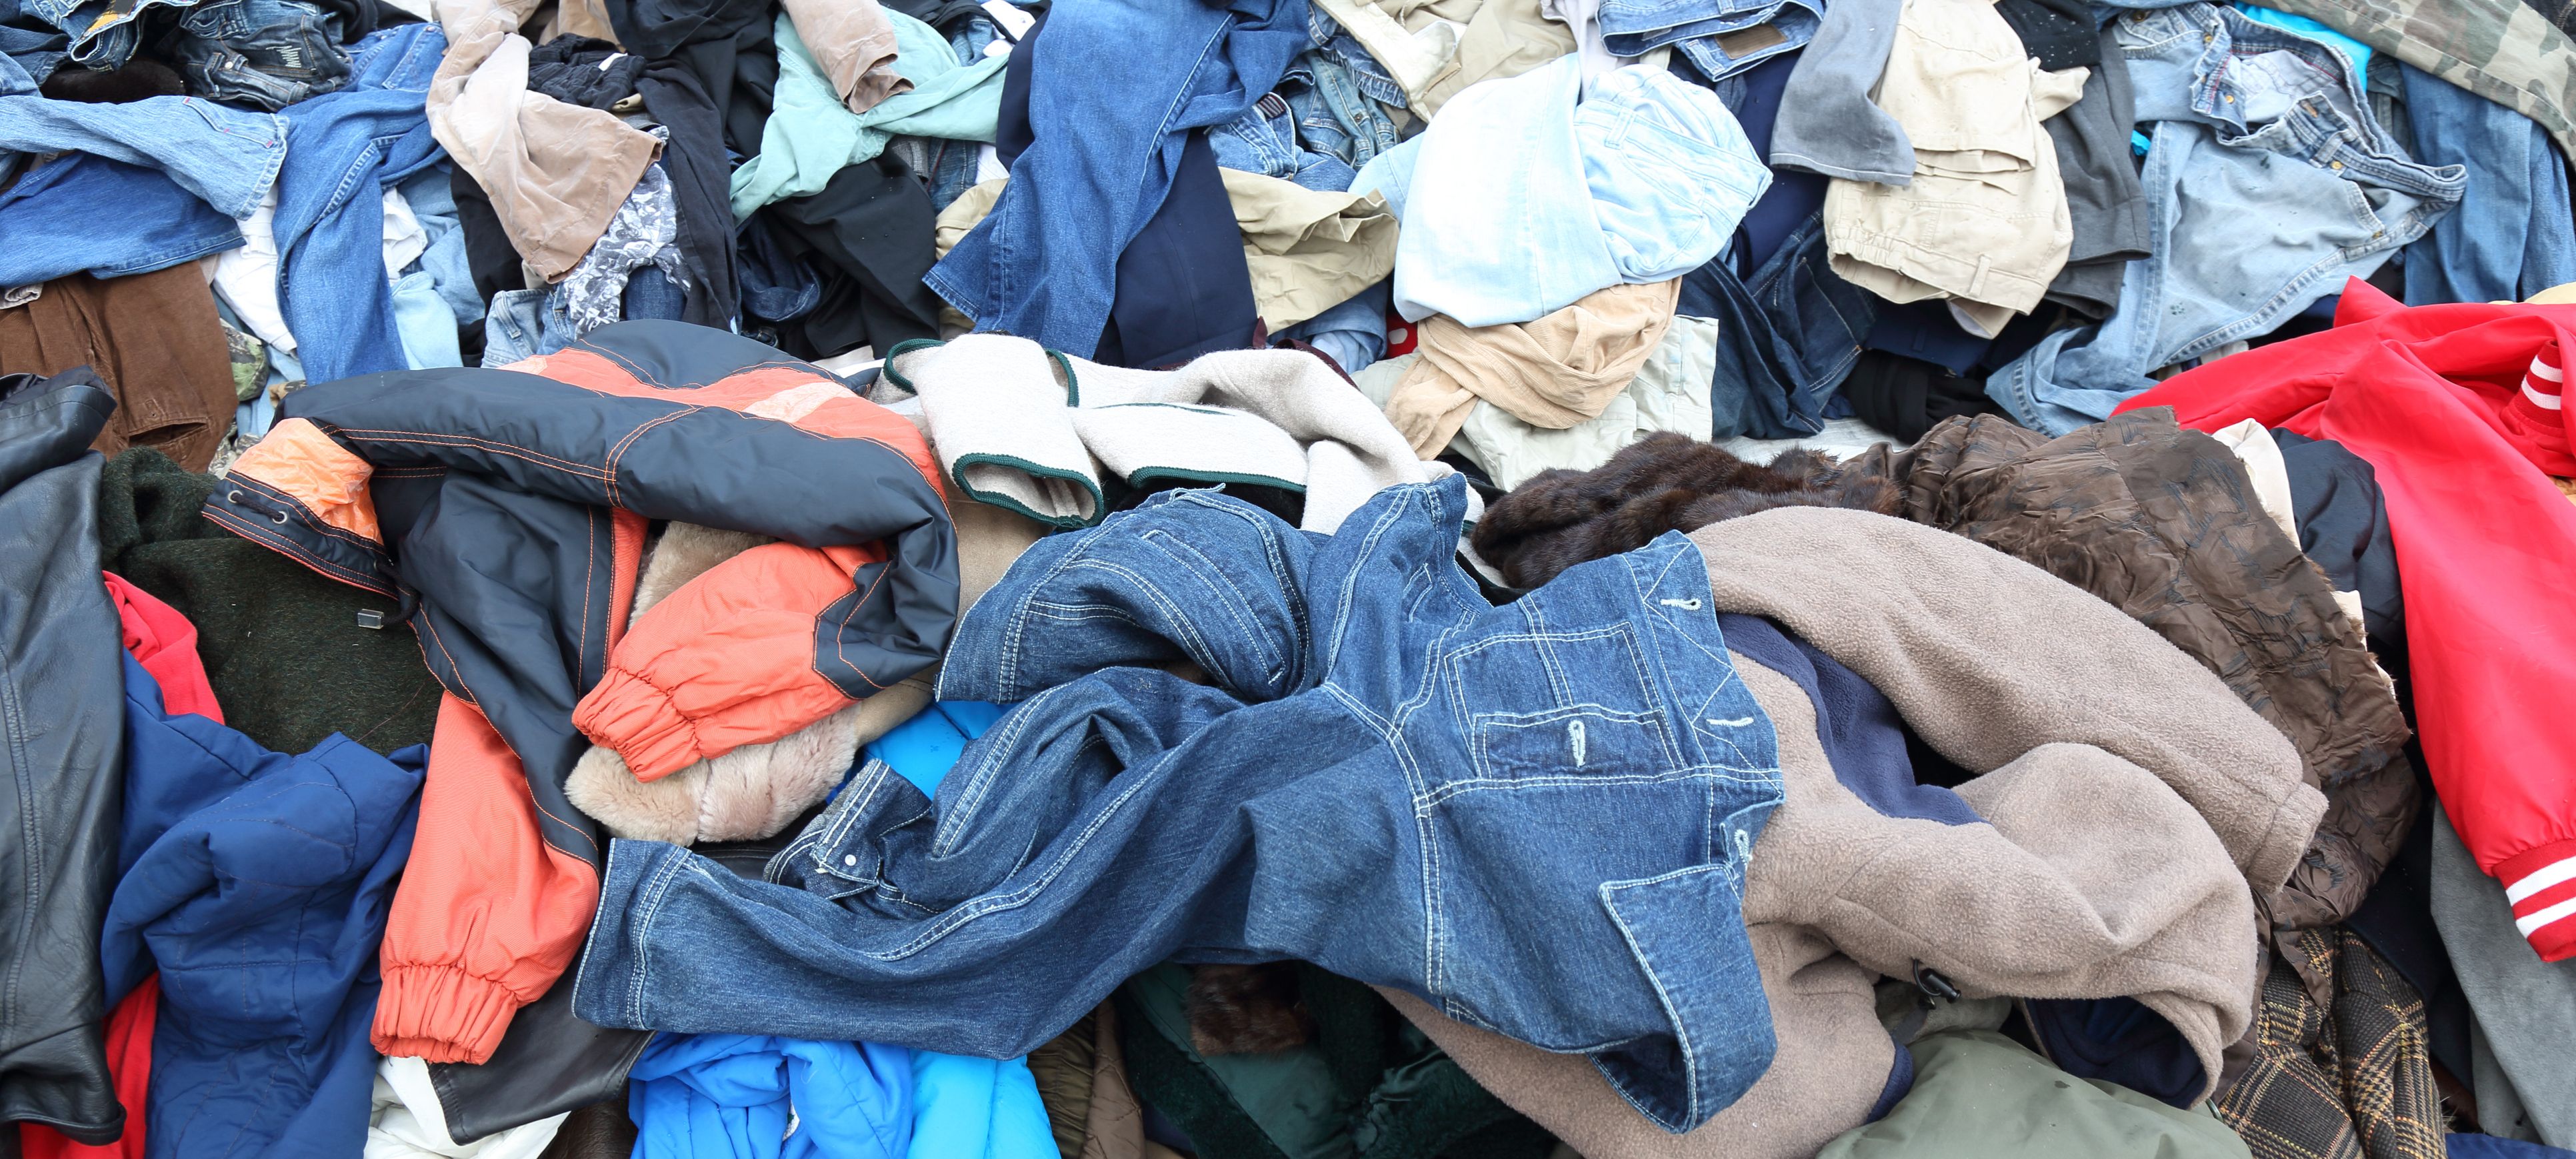 Textile waste - clothing